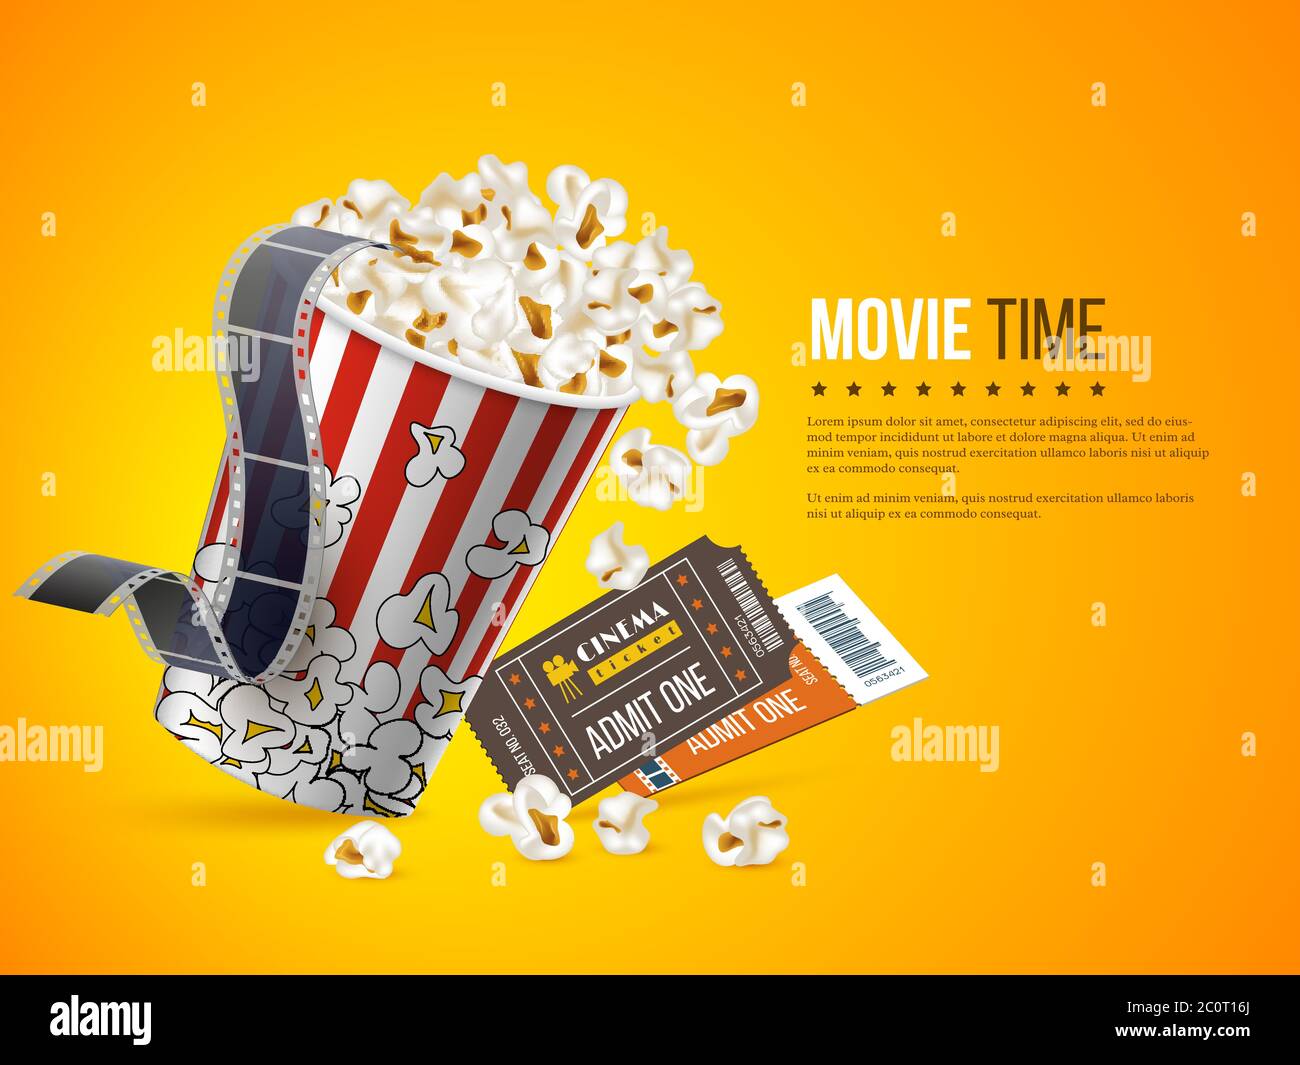 Cinema and movie poster design Stock Vector Image & Art - Alamy